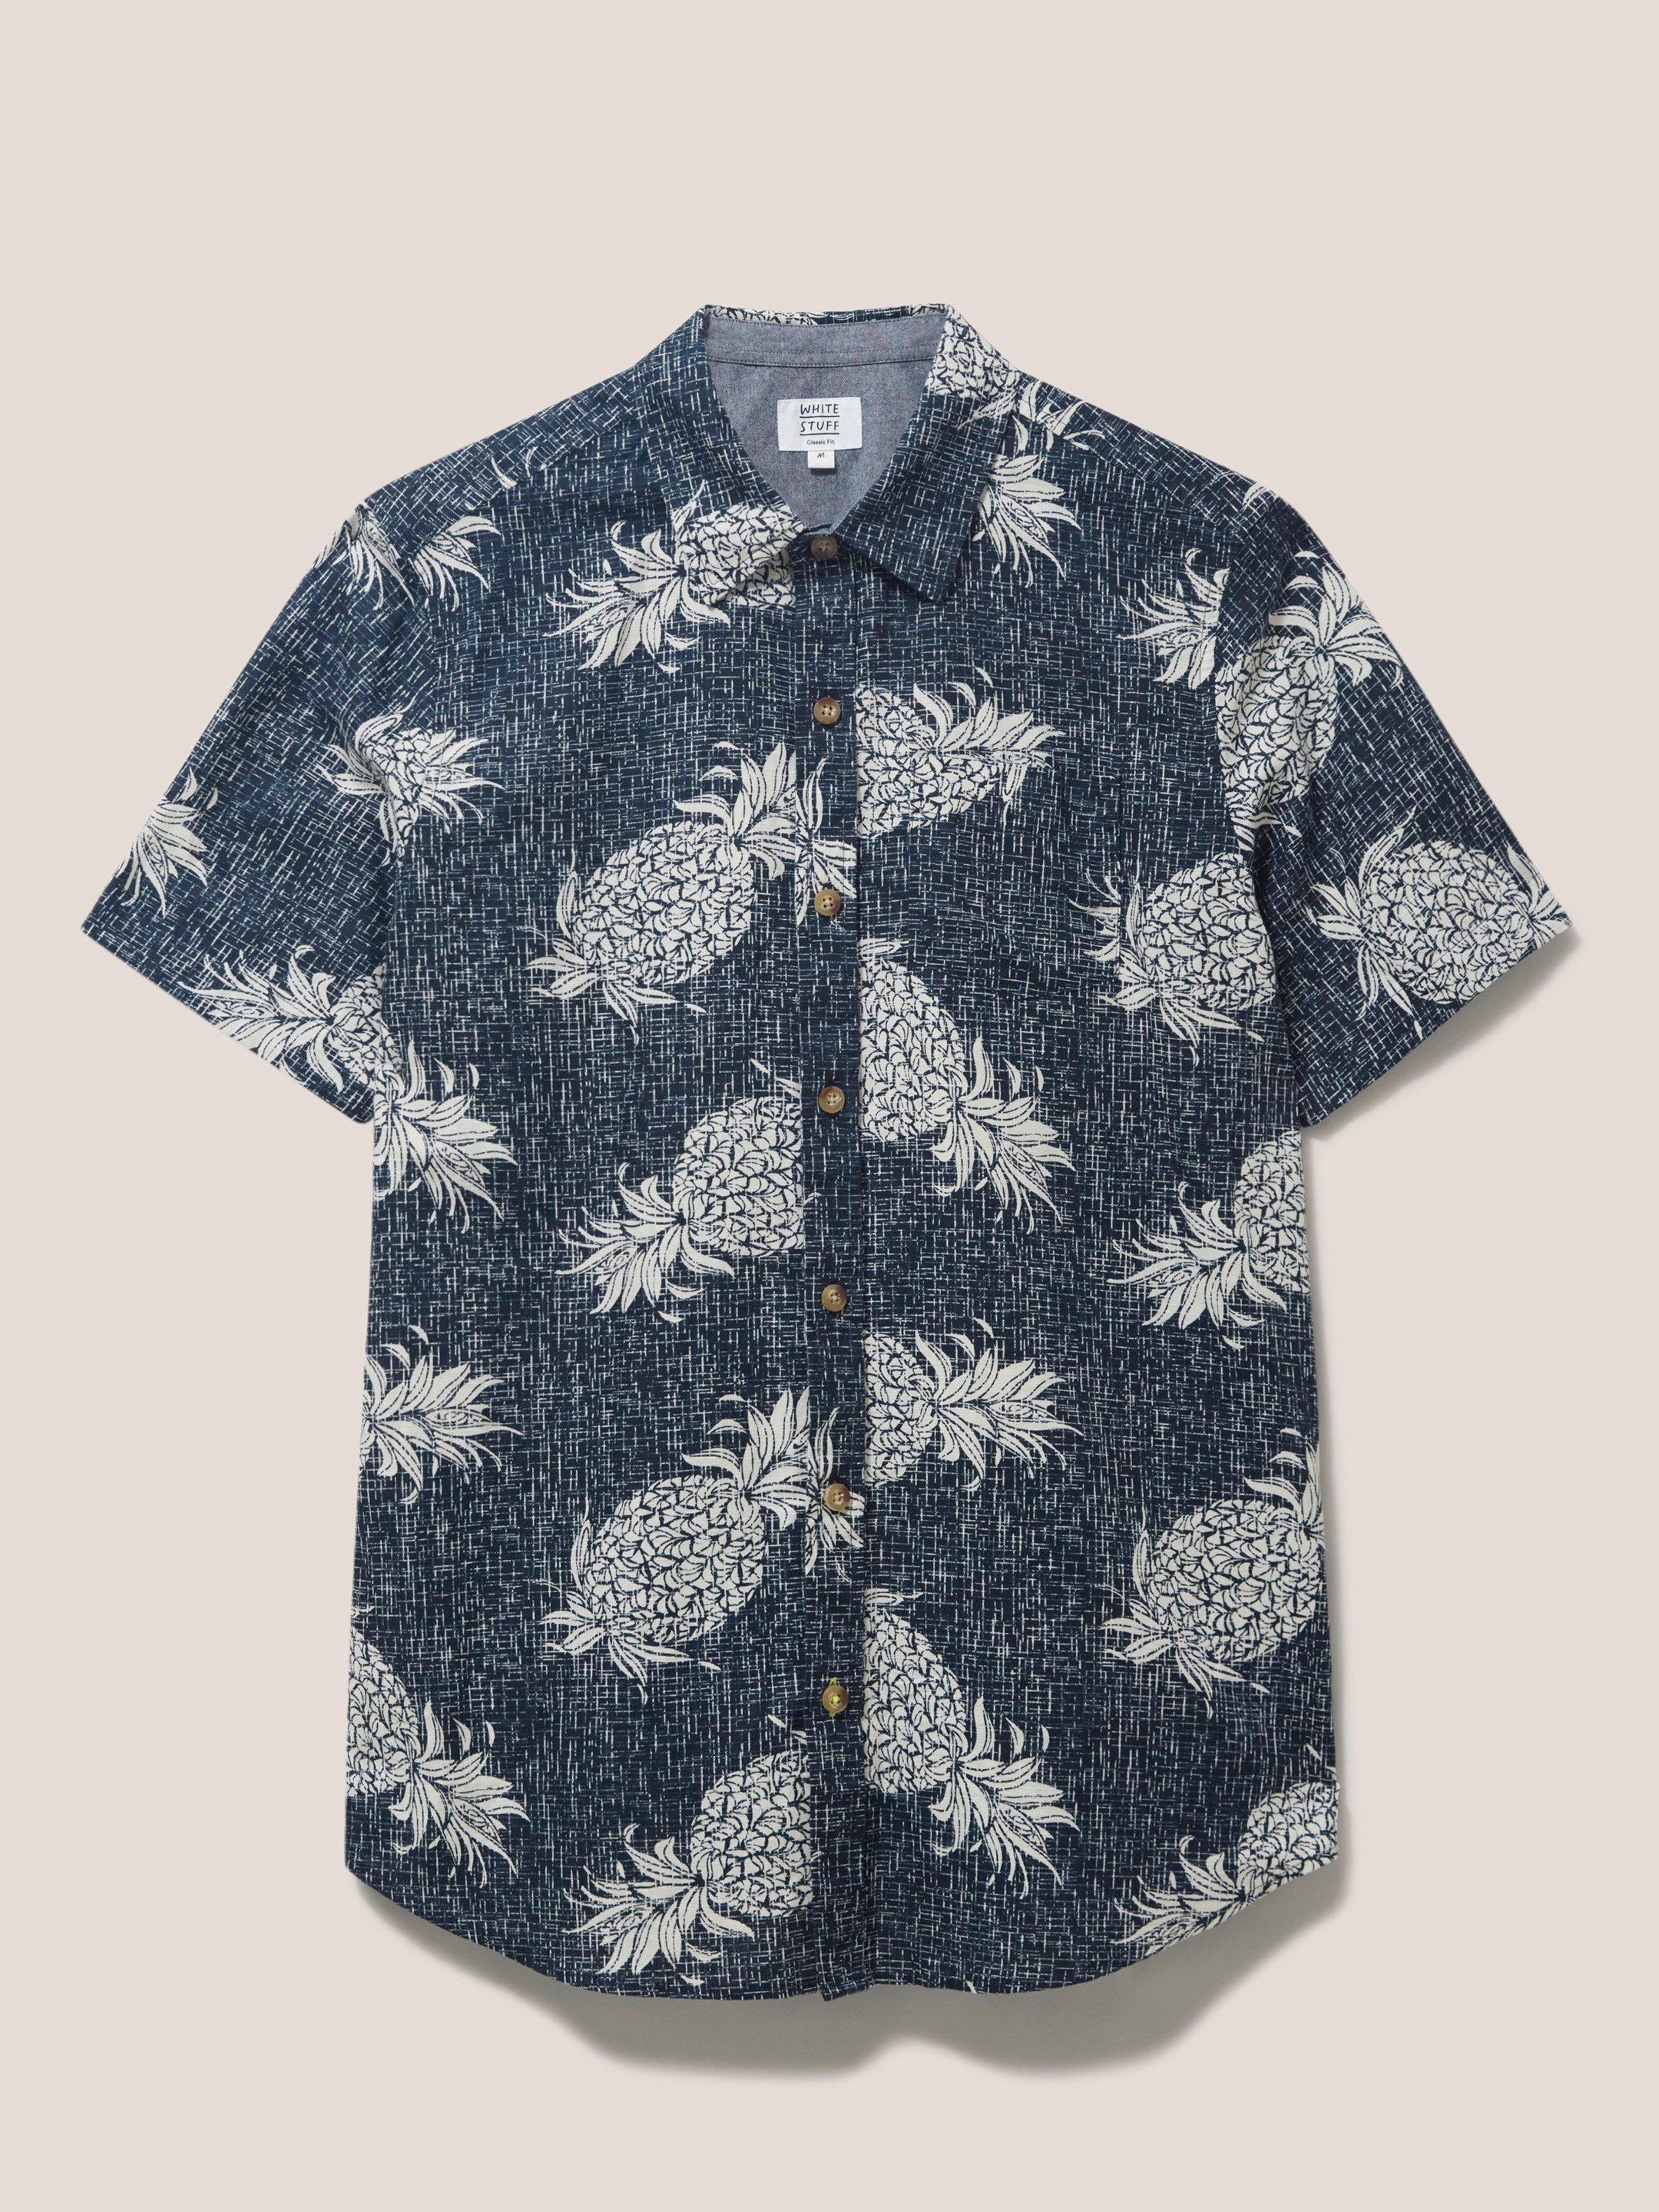 Penare Pineapple PR SS Shirt in DARK NAVY - FLAT FRONT